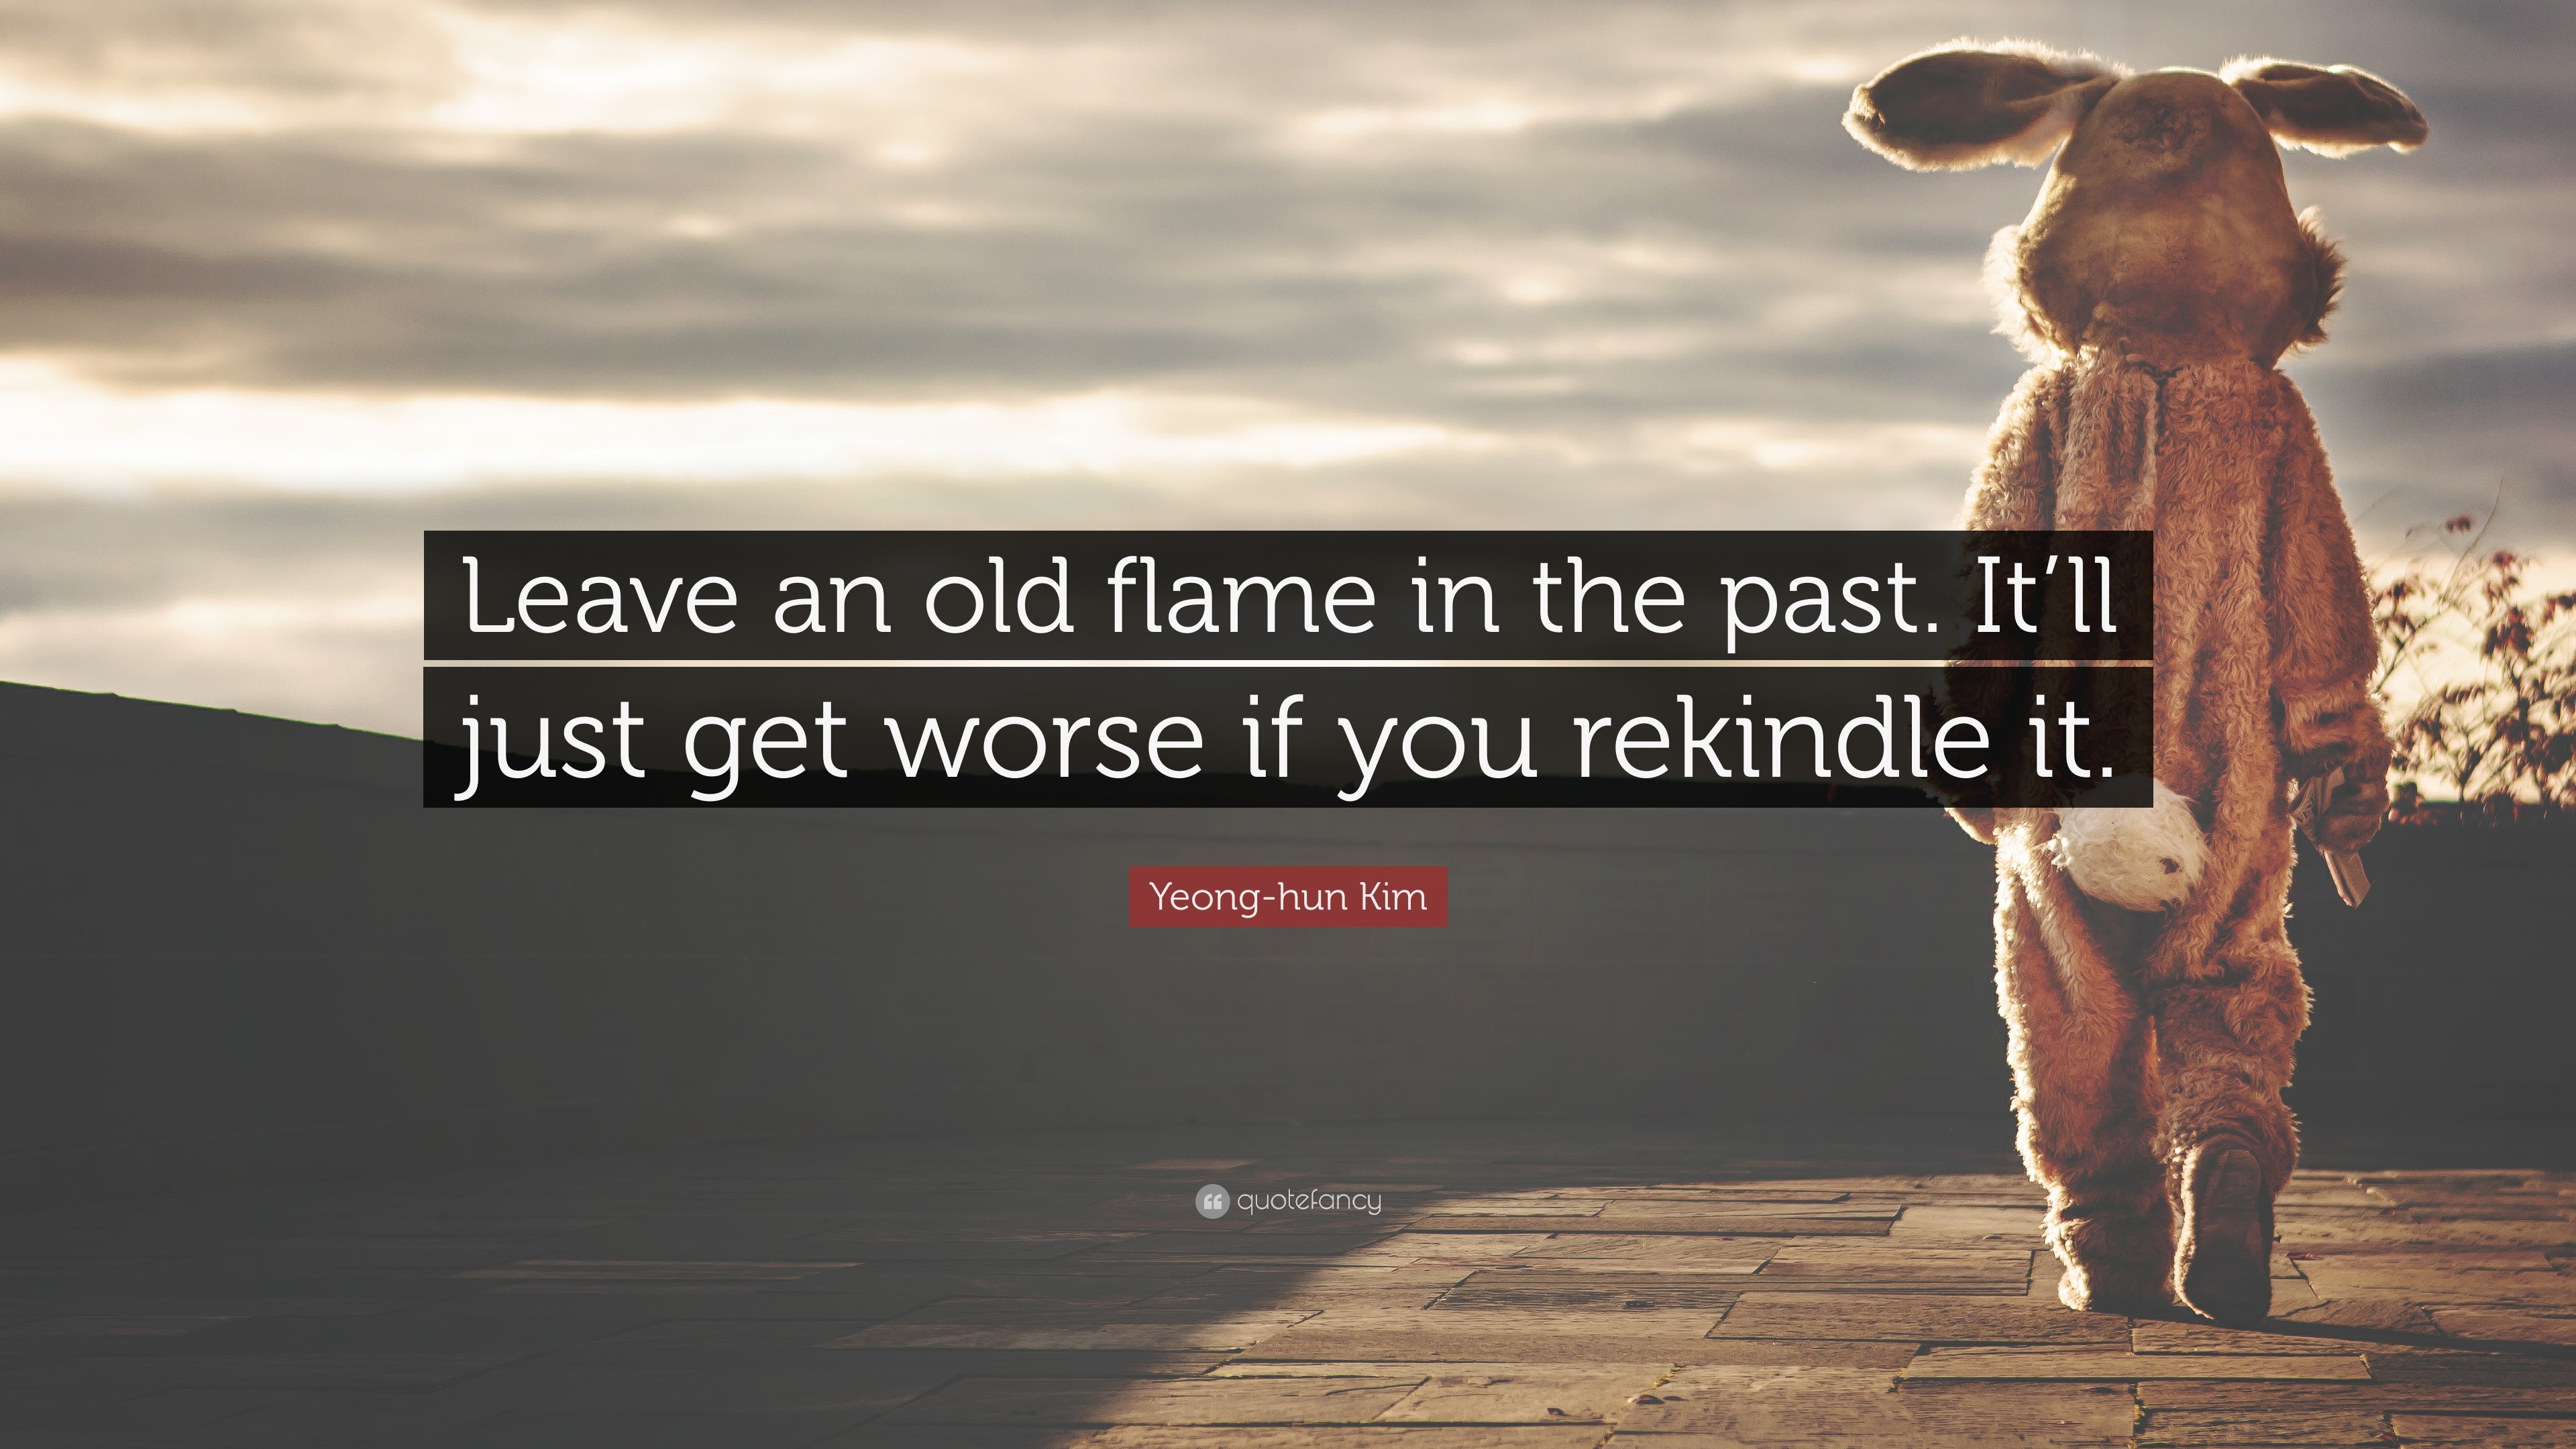 Rekindling an old flame.